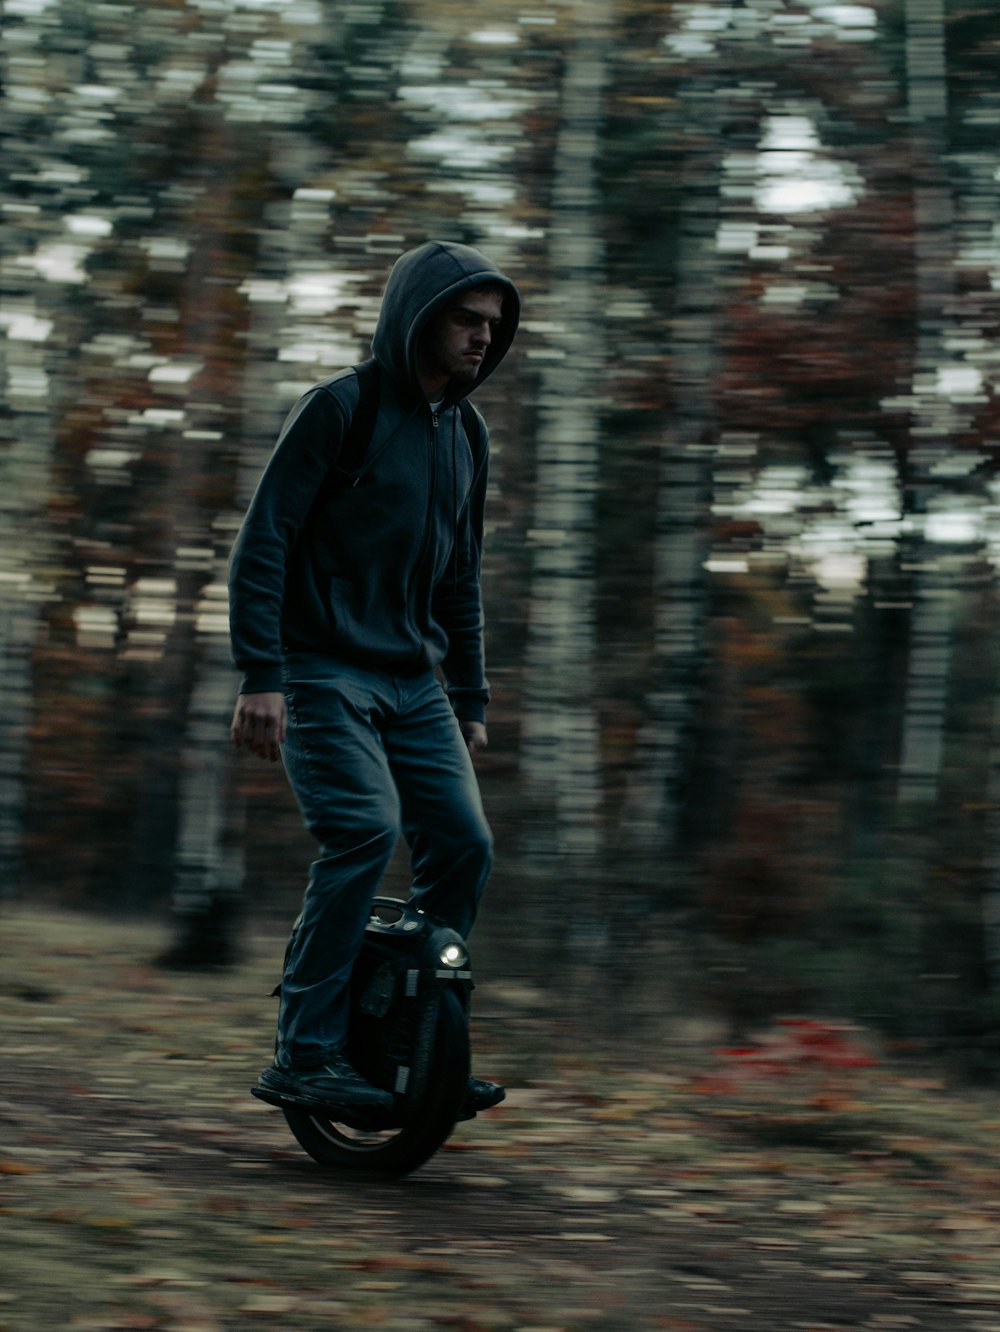 a man riding a scooter through a forest